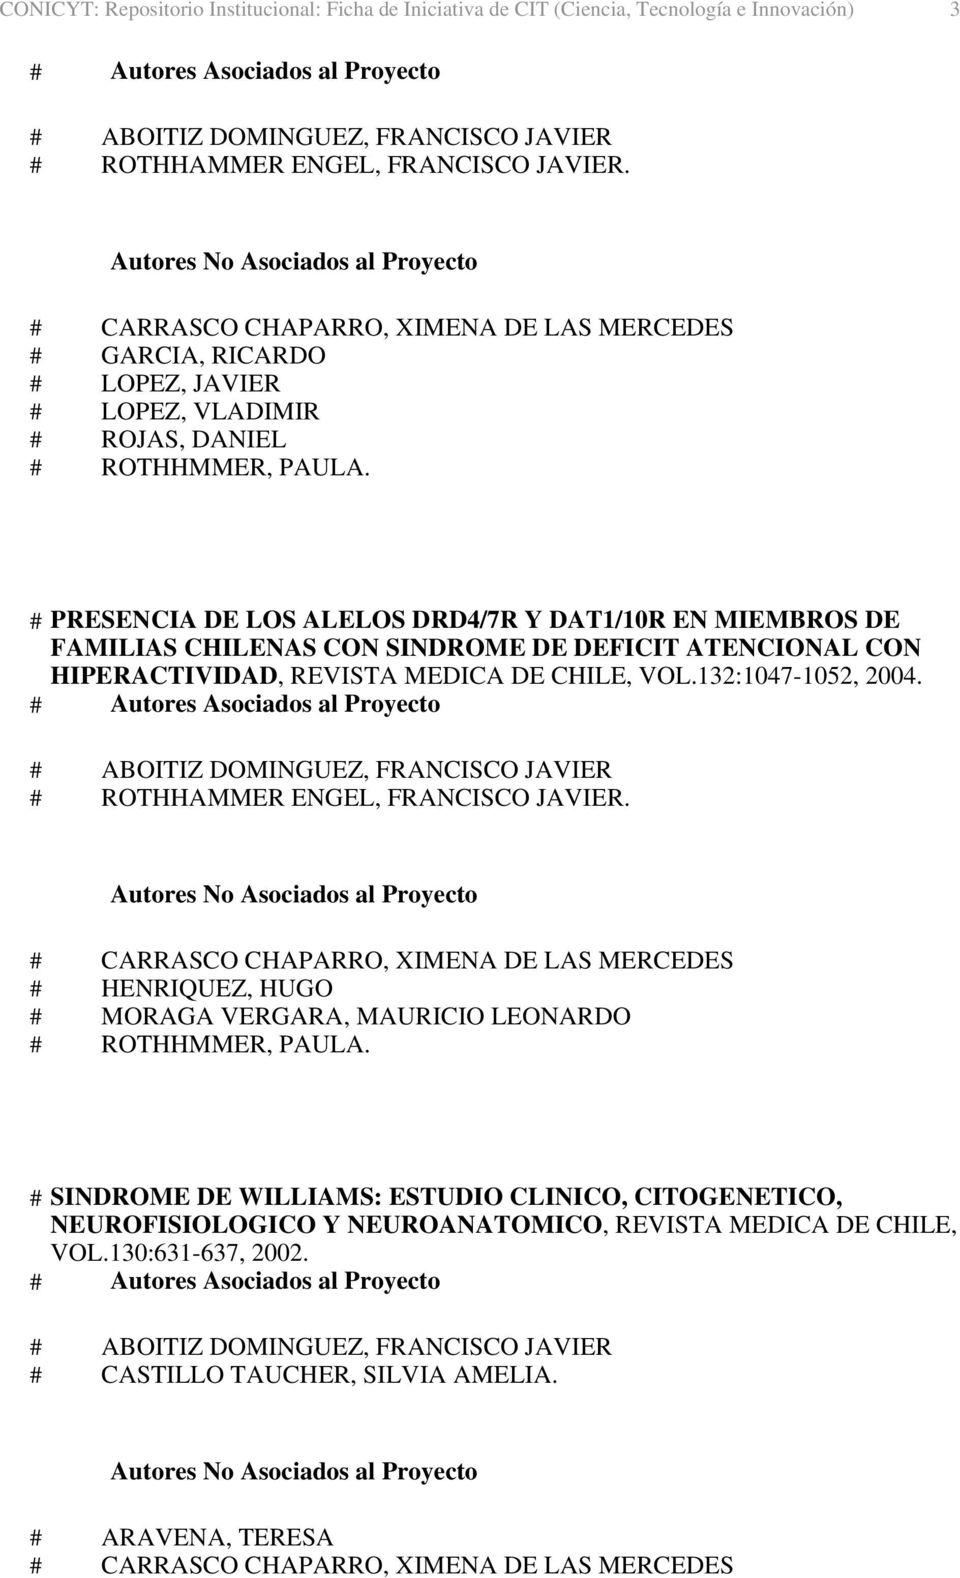 REVISTA MEDICA DE CHILE, VOL.132:1047-1052, 2004.